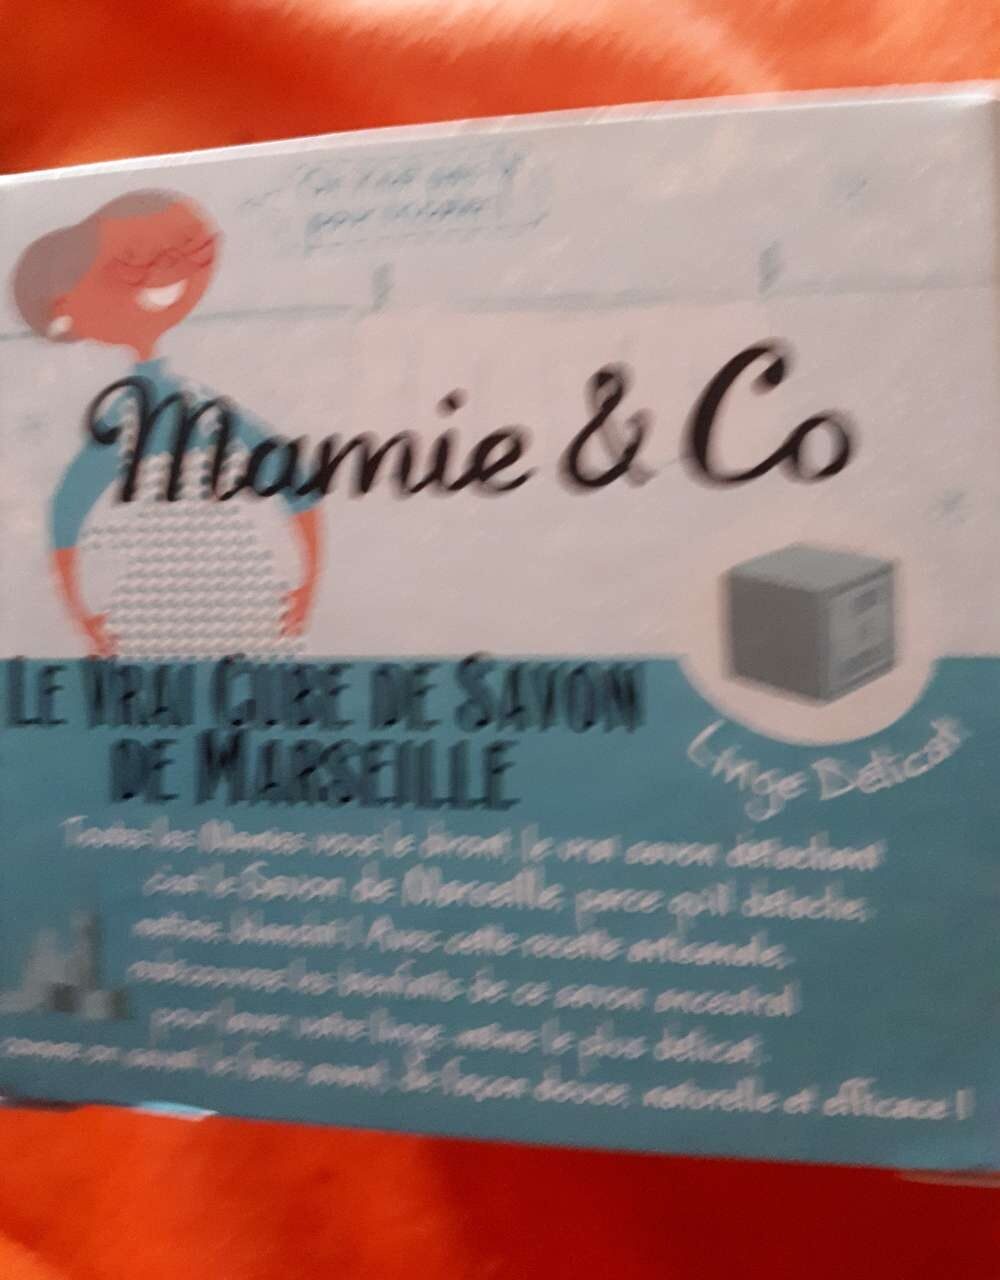 Vrai cube de savon de Marseille - Product - en